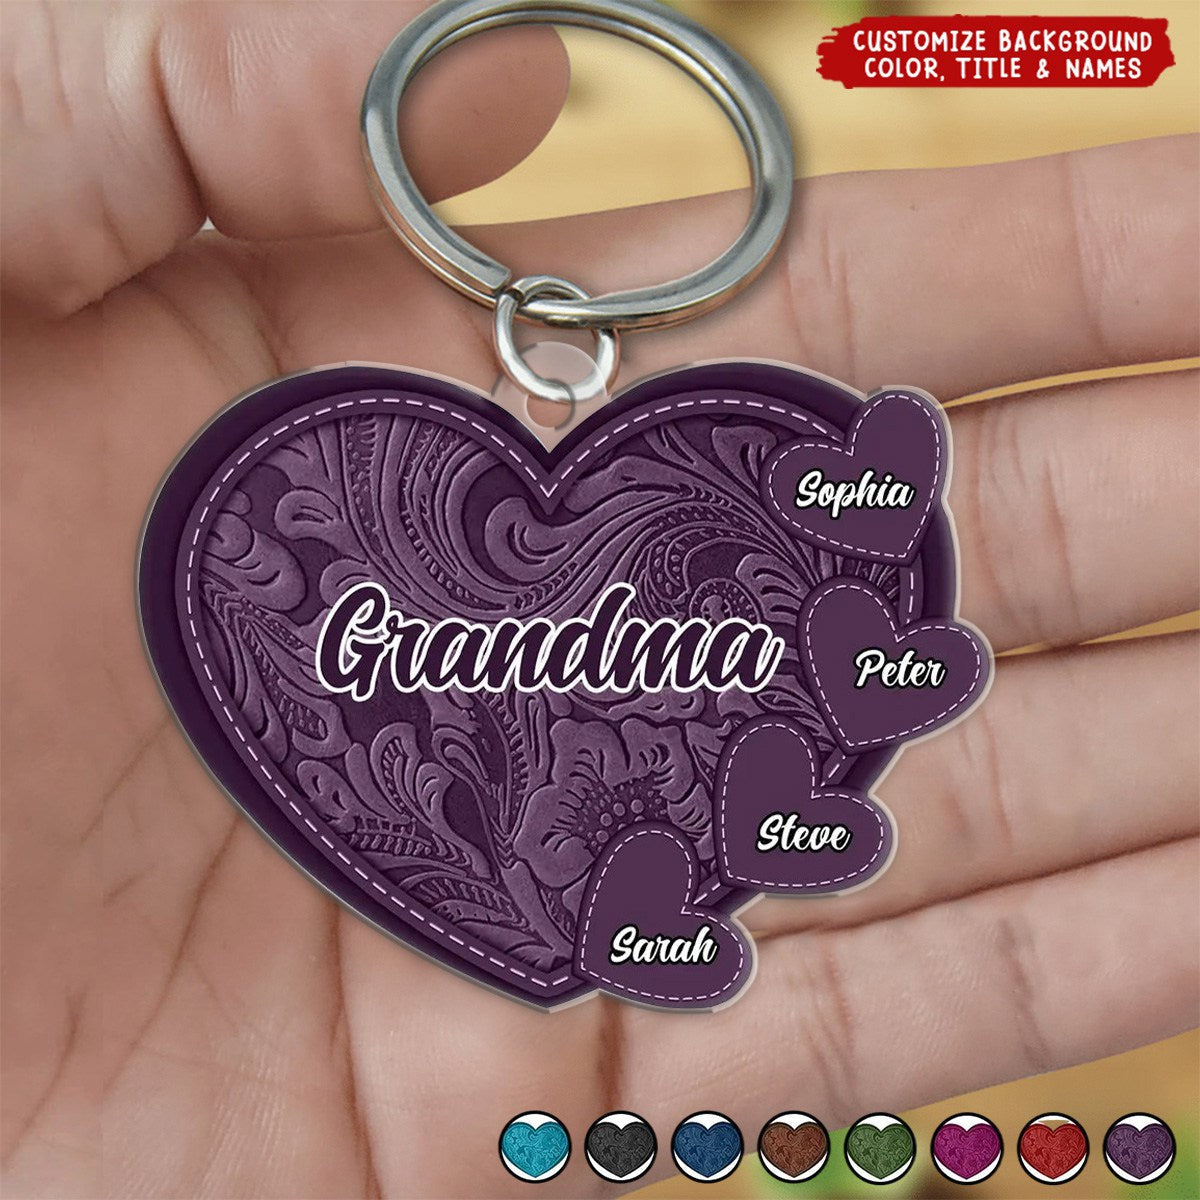 Grandma's Little Sweethearts - Personalized Cutout Acrylic Keychain